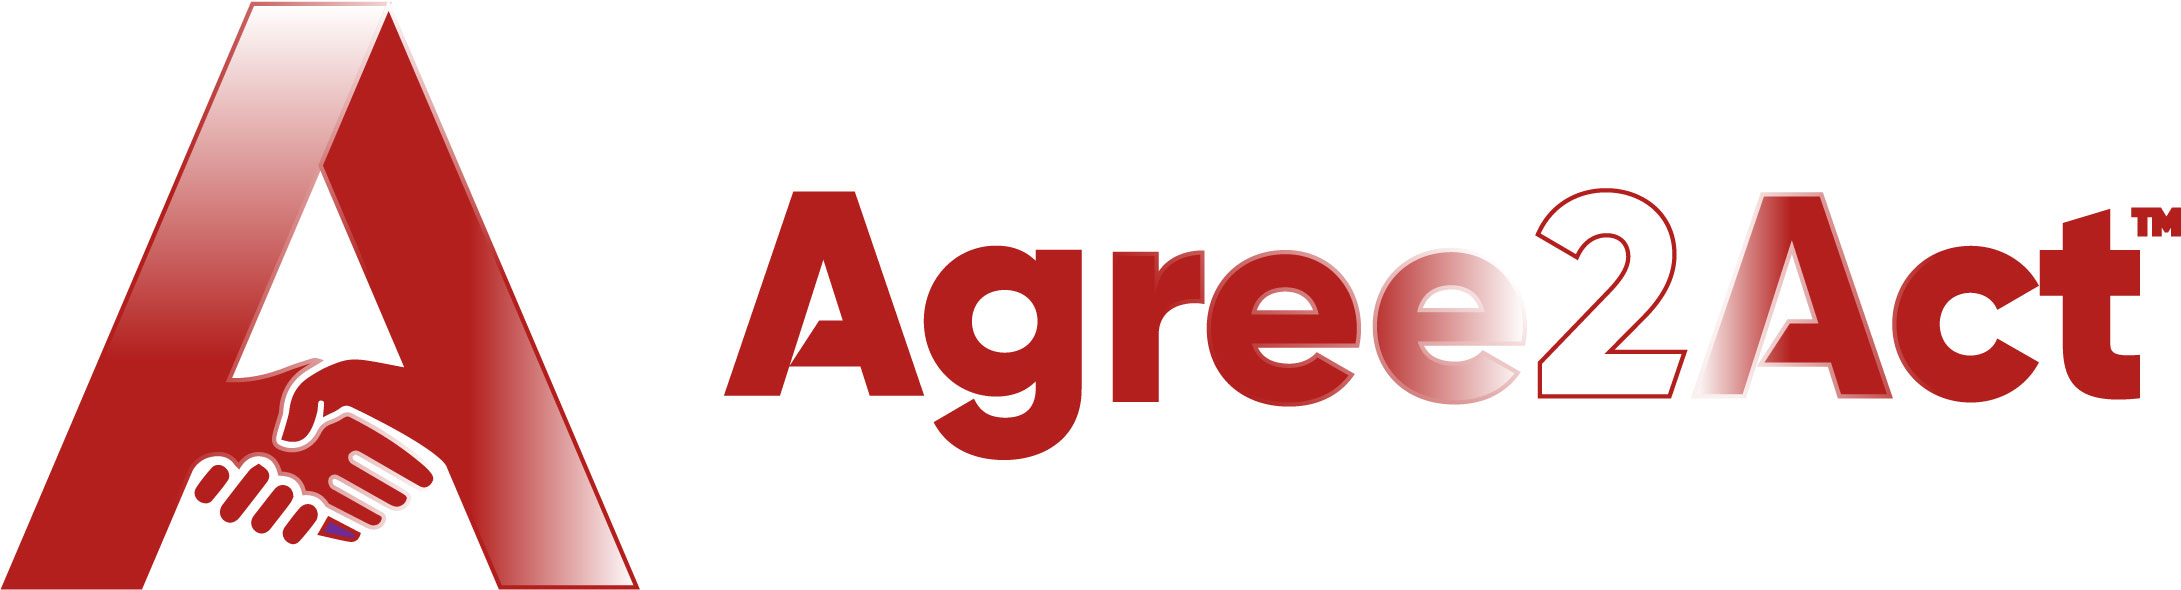 Agree2Act Logo mit Text